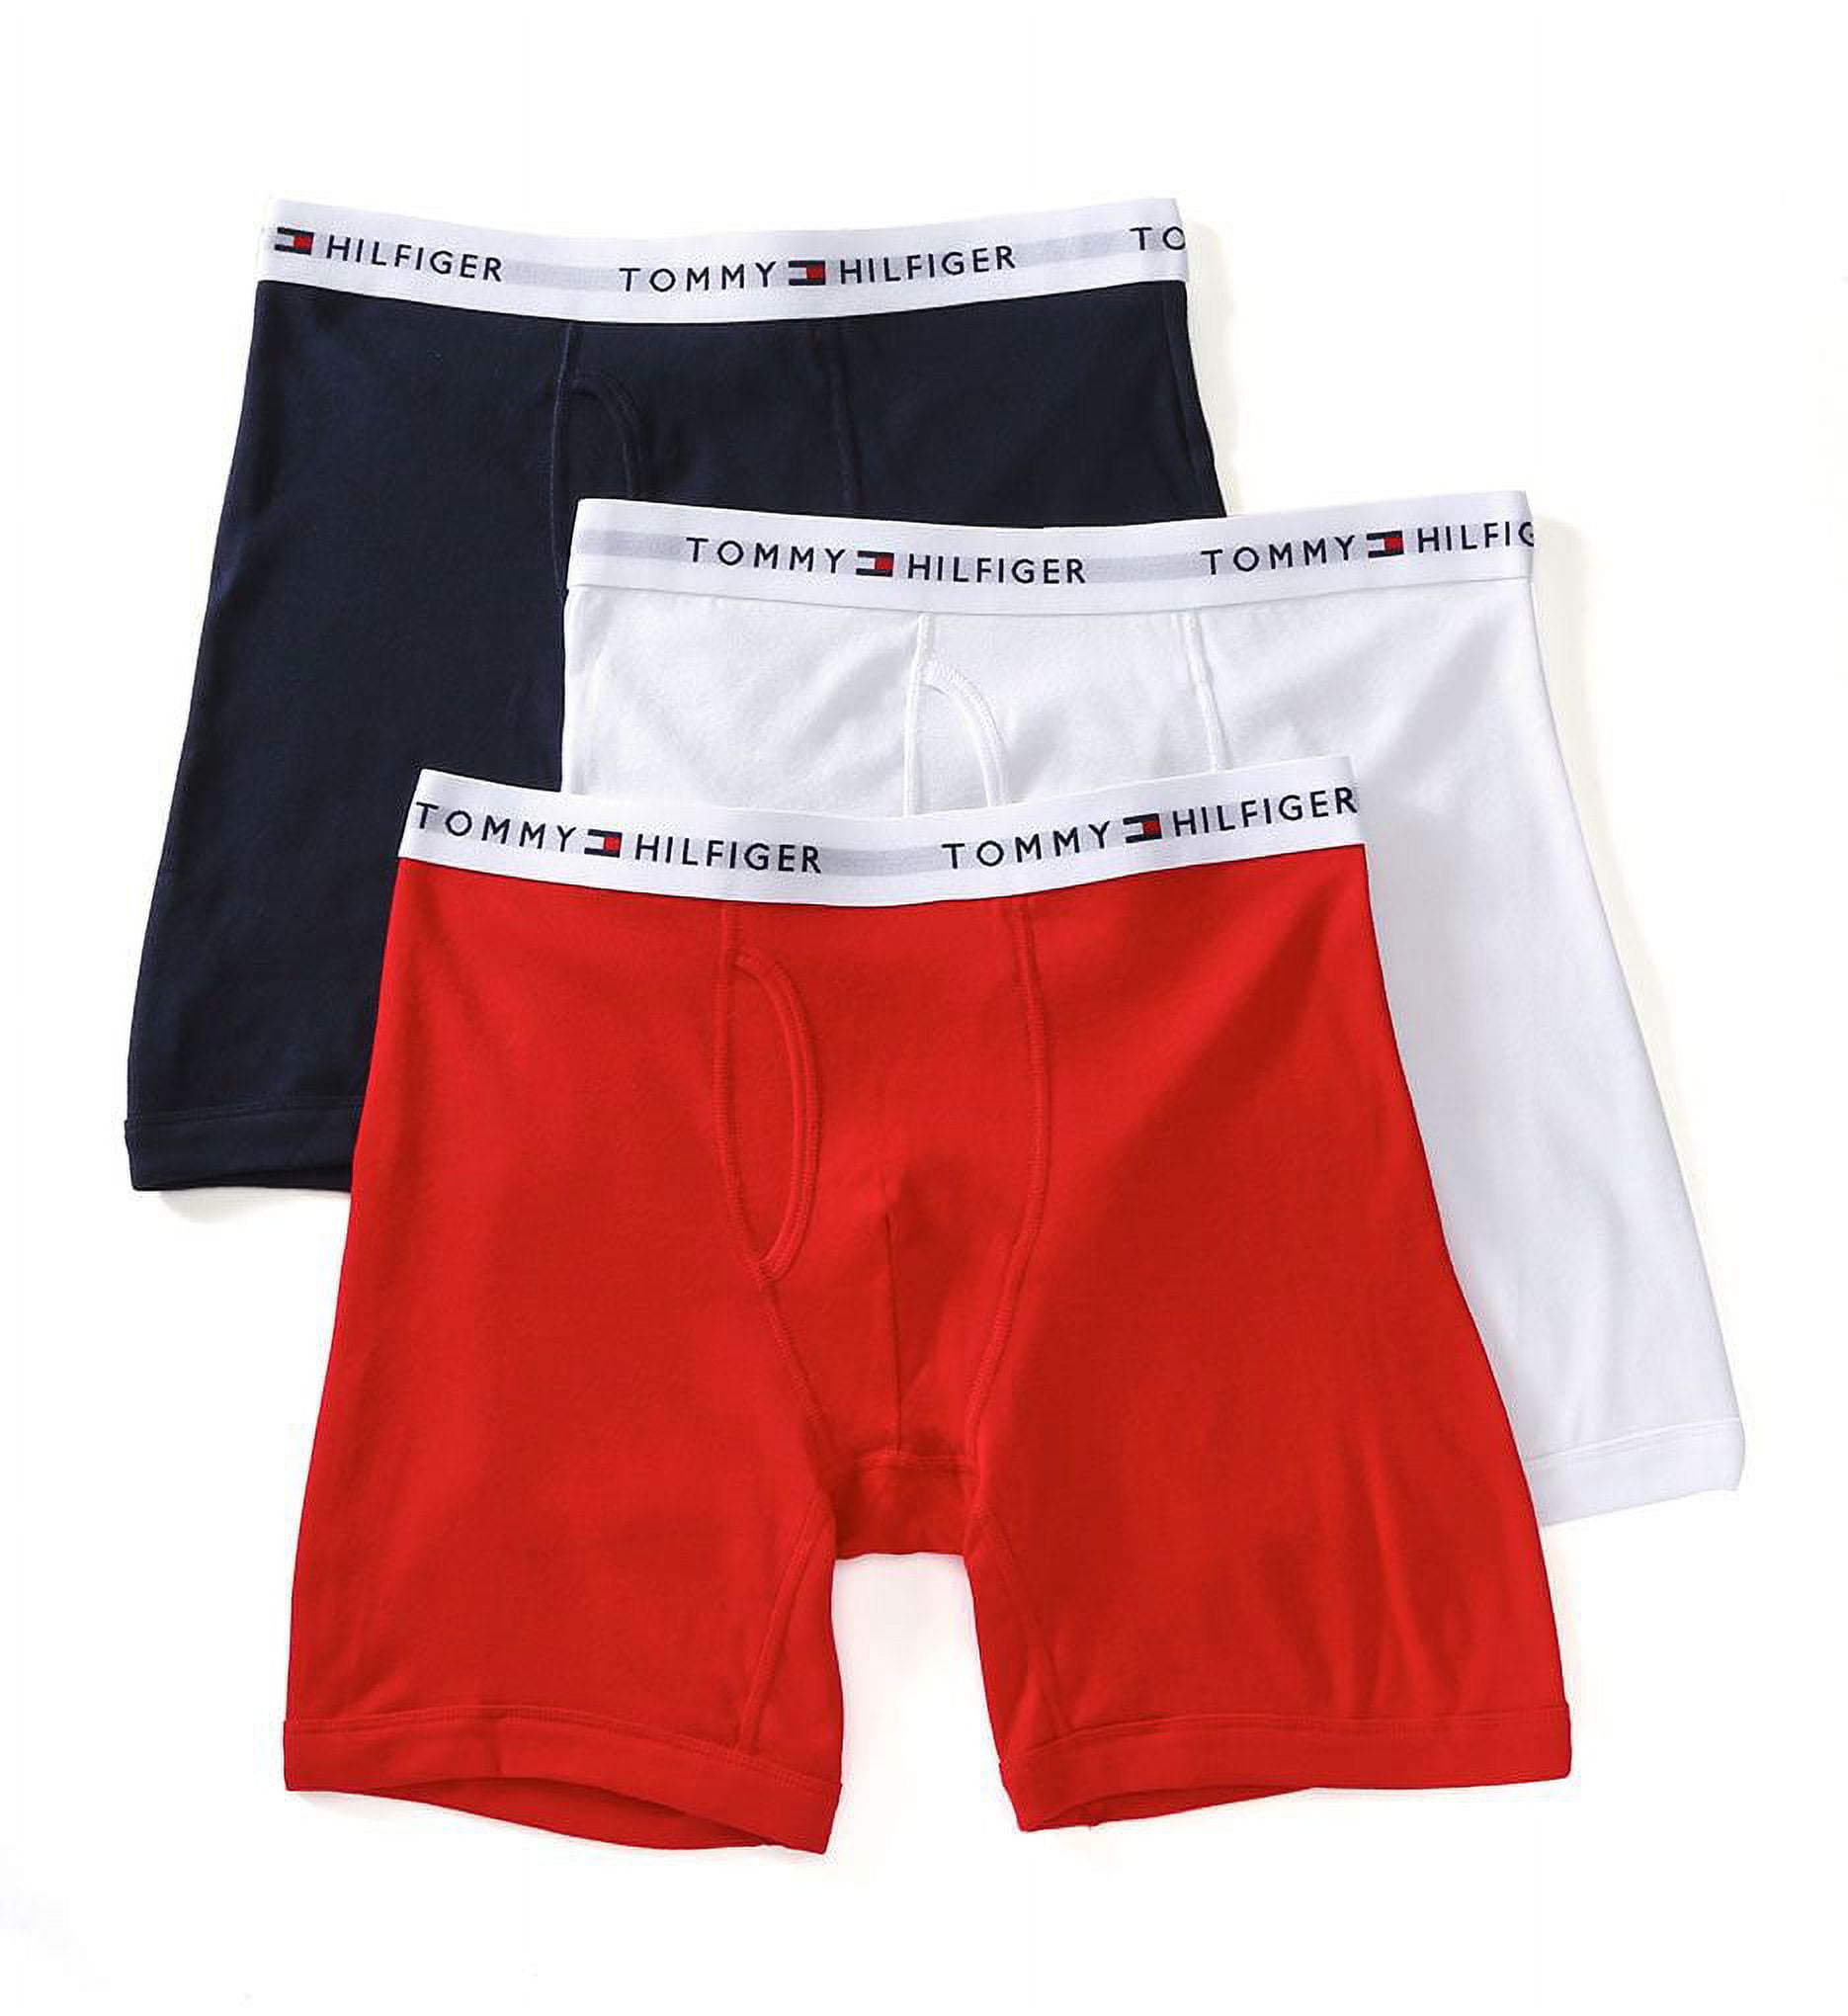 Tommy Hilfiger Mens 3-Pack Cotton Classics Boxer Brief Black/Red/White  Medium 